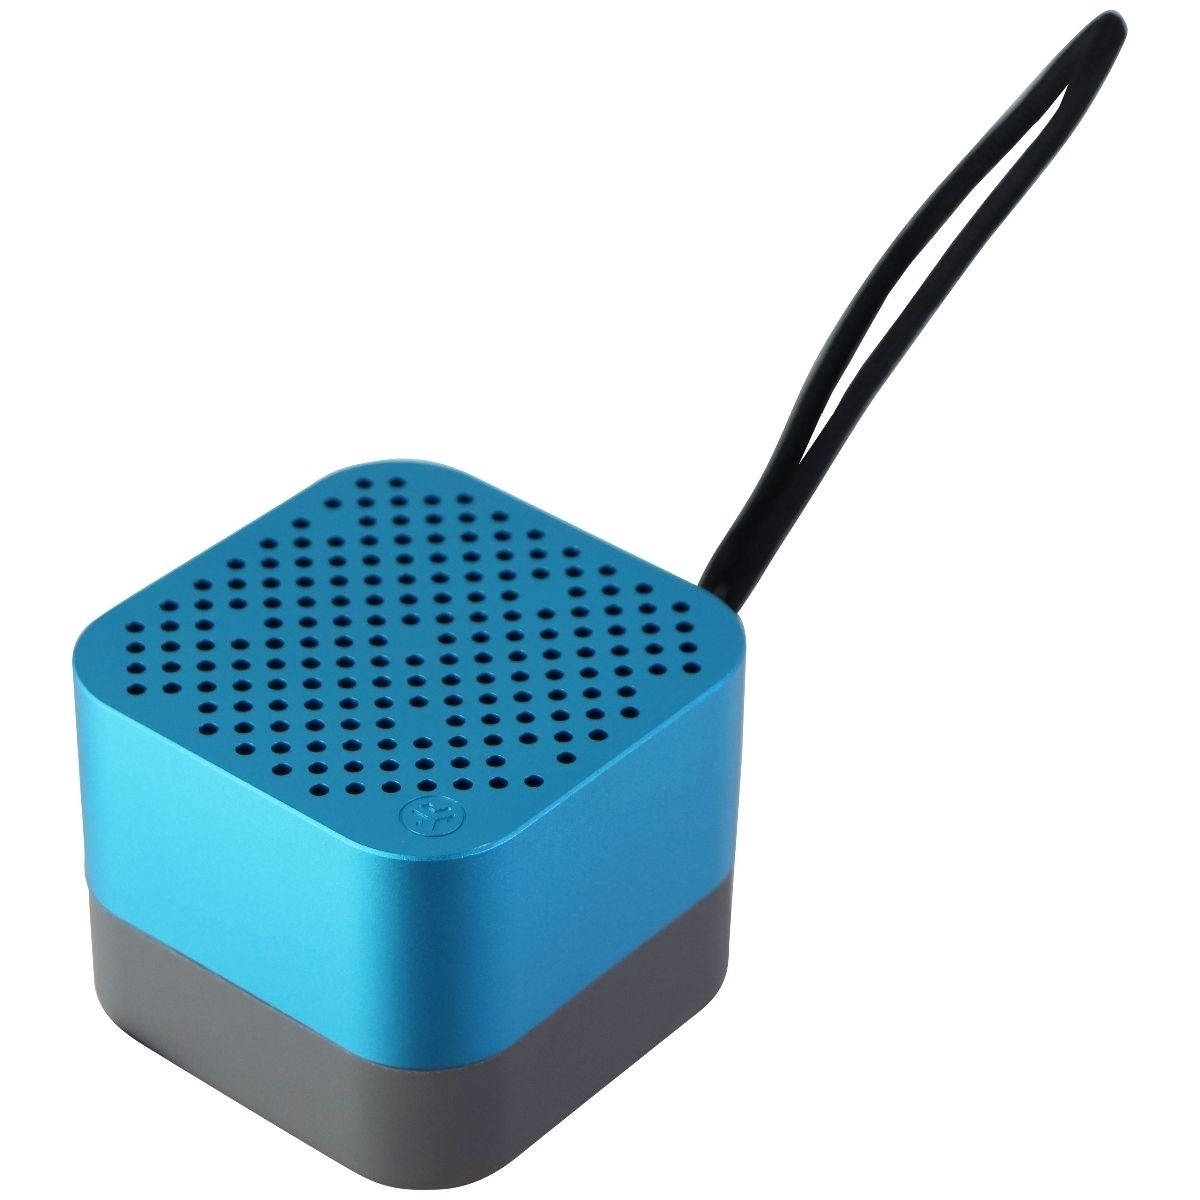 JLab Crasher Micro USB Rechargeable Wireless Bluetooth Speaker - Blue